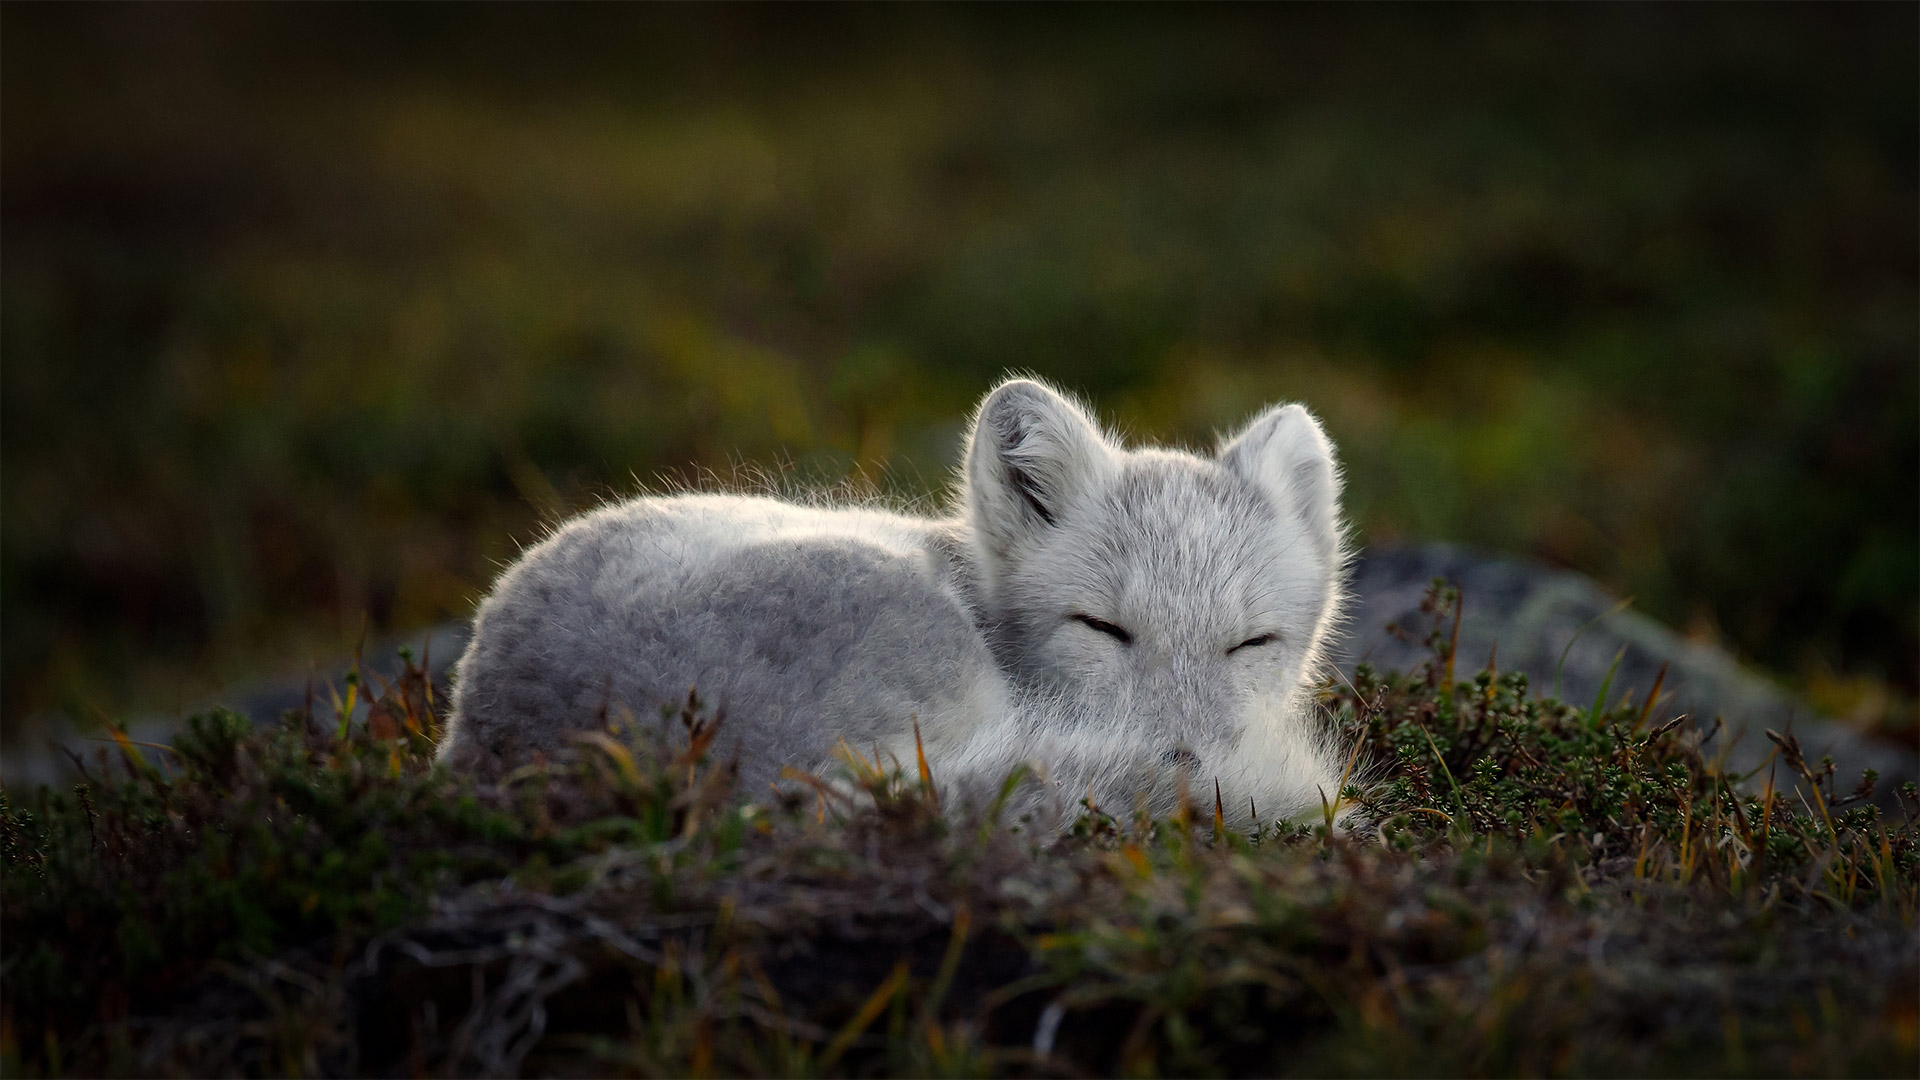 Sleeping Arctic fox - Menno Schaefer/Getty Images)